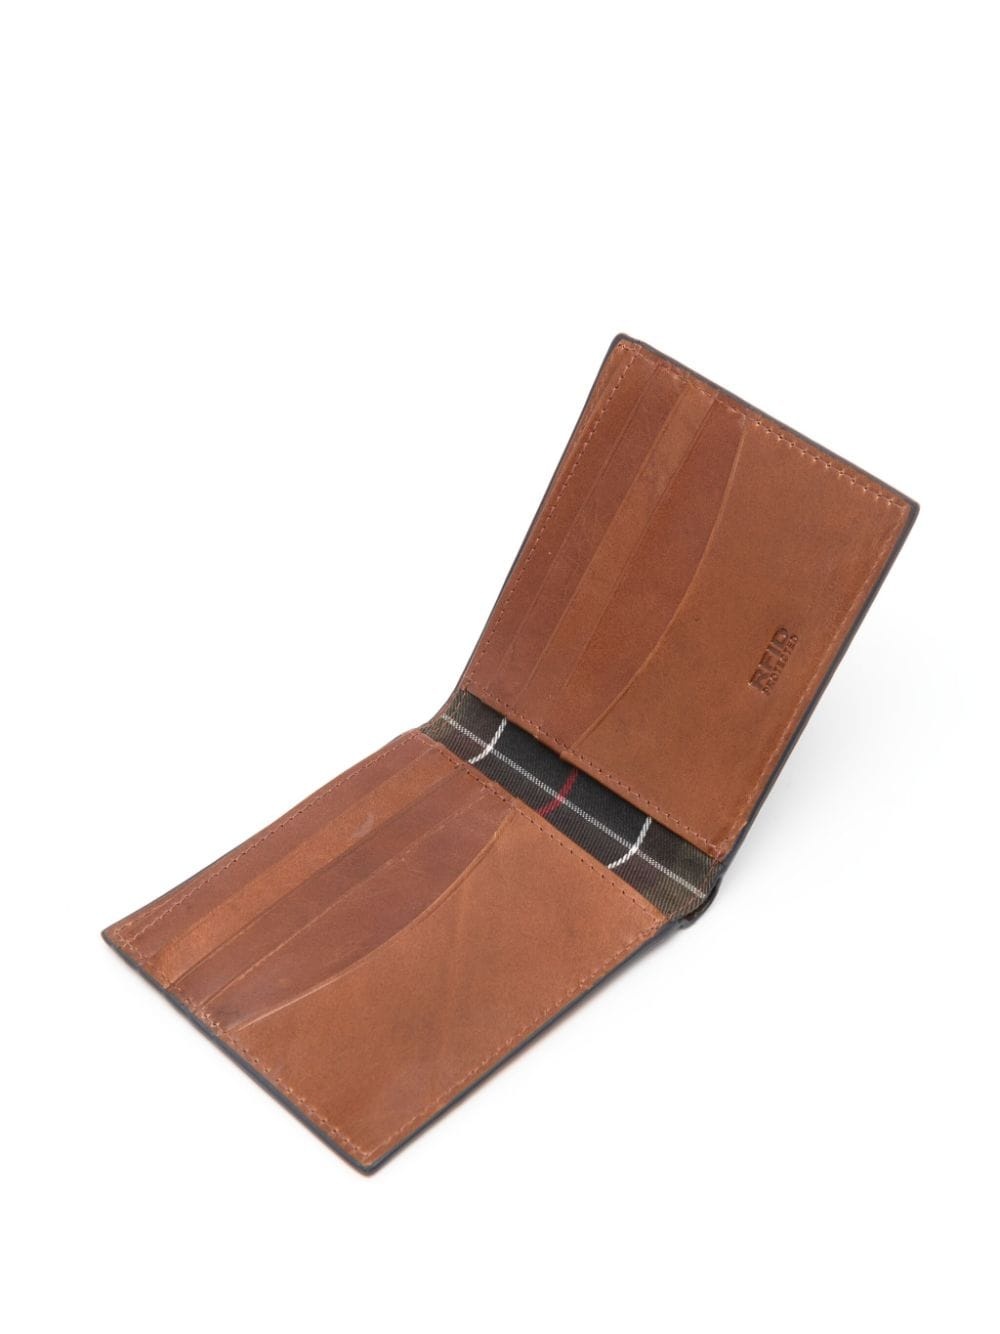 Torridon leather wallet - 3